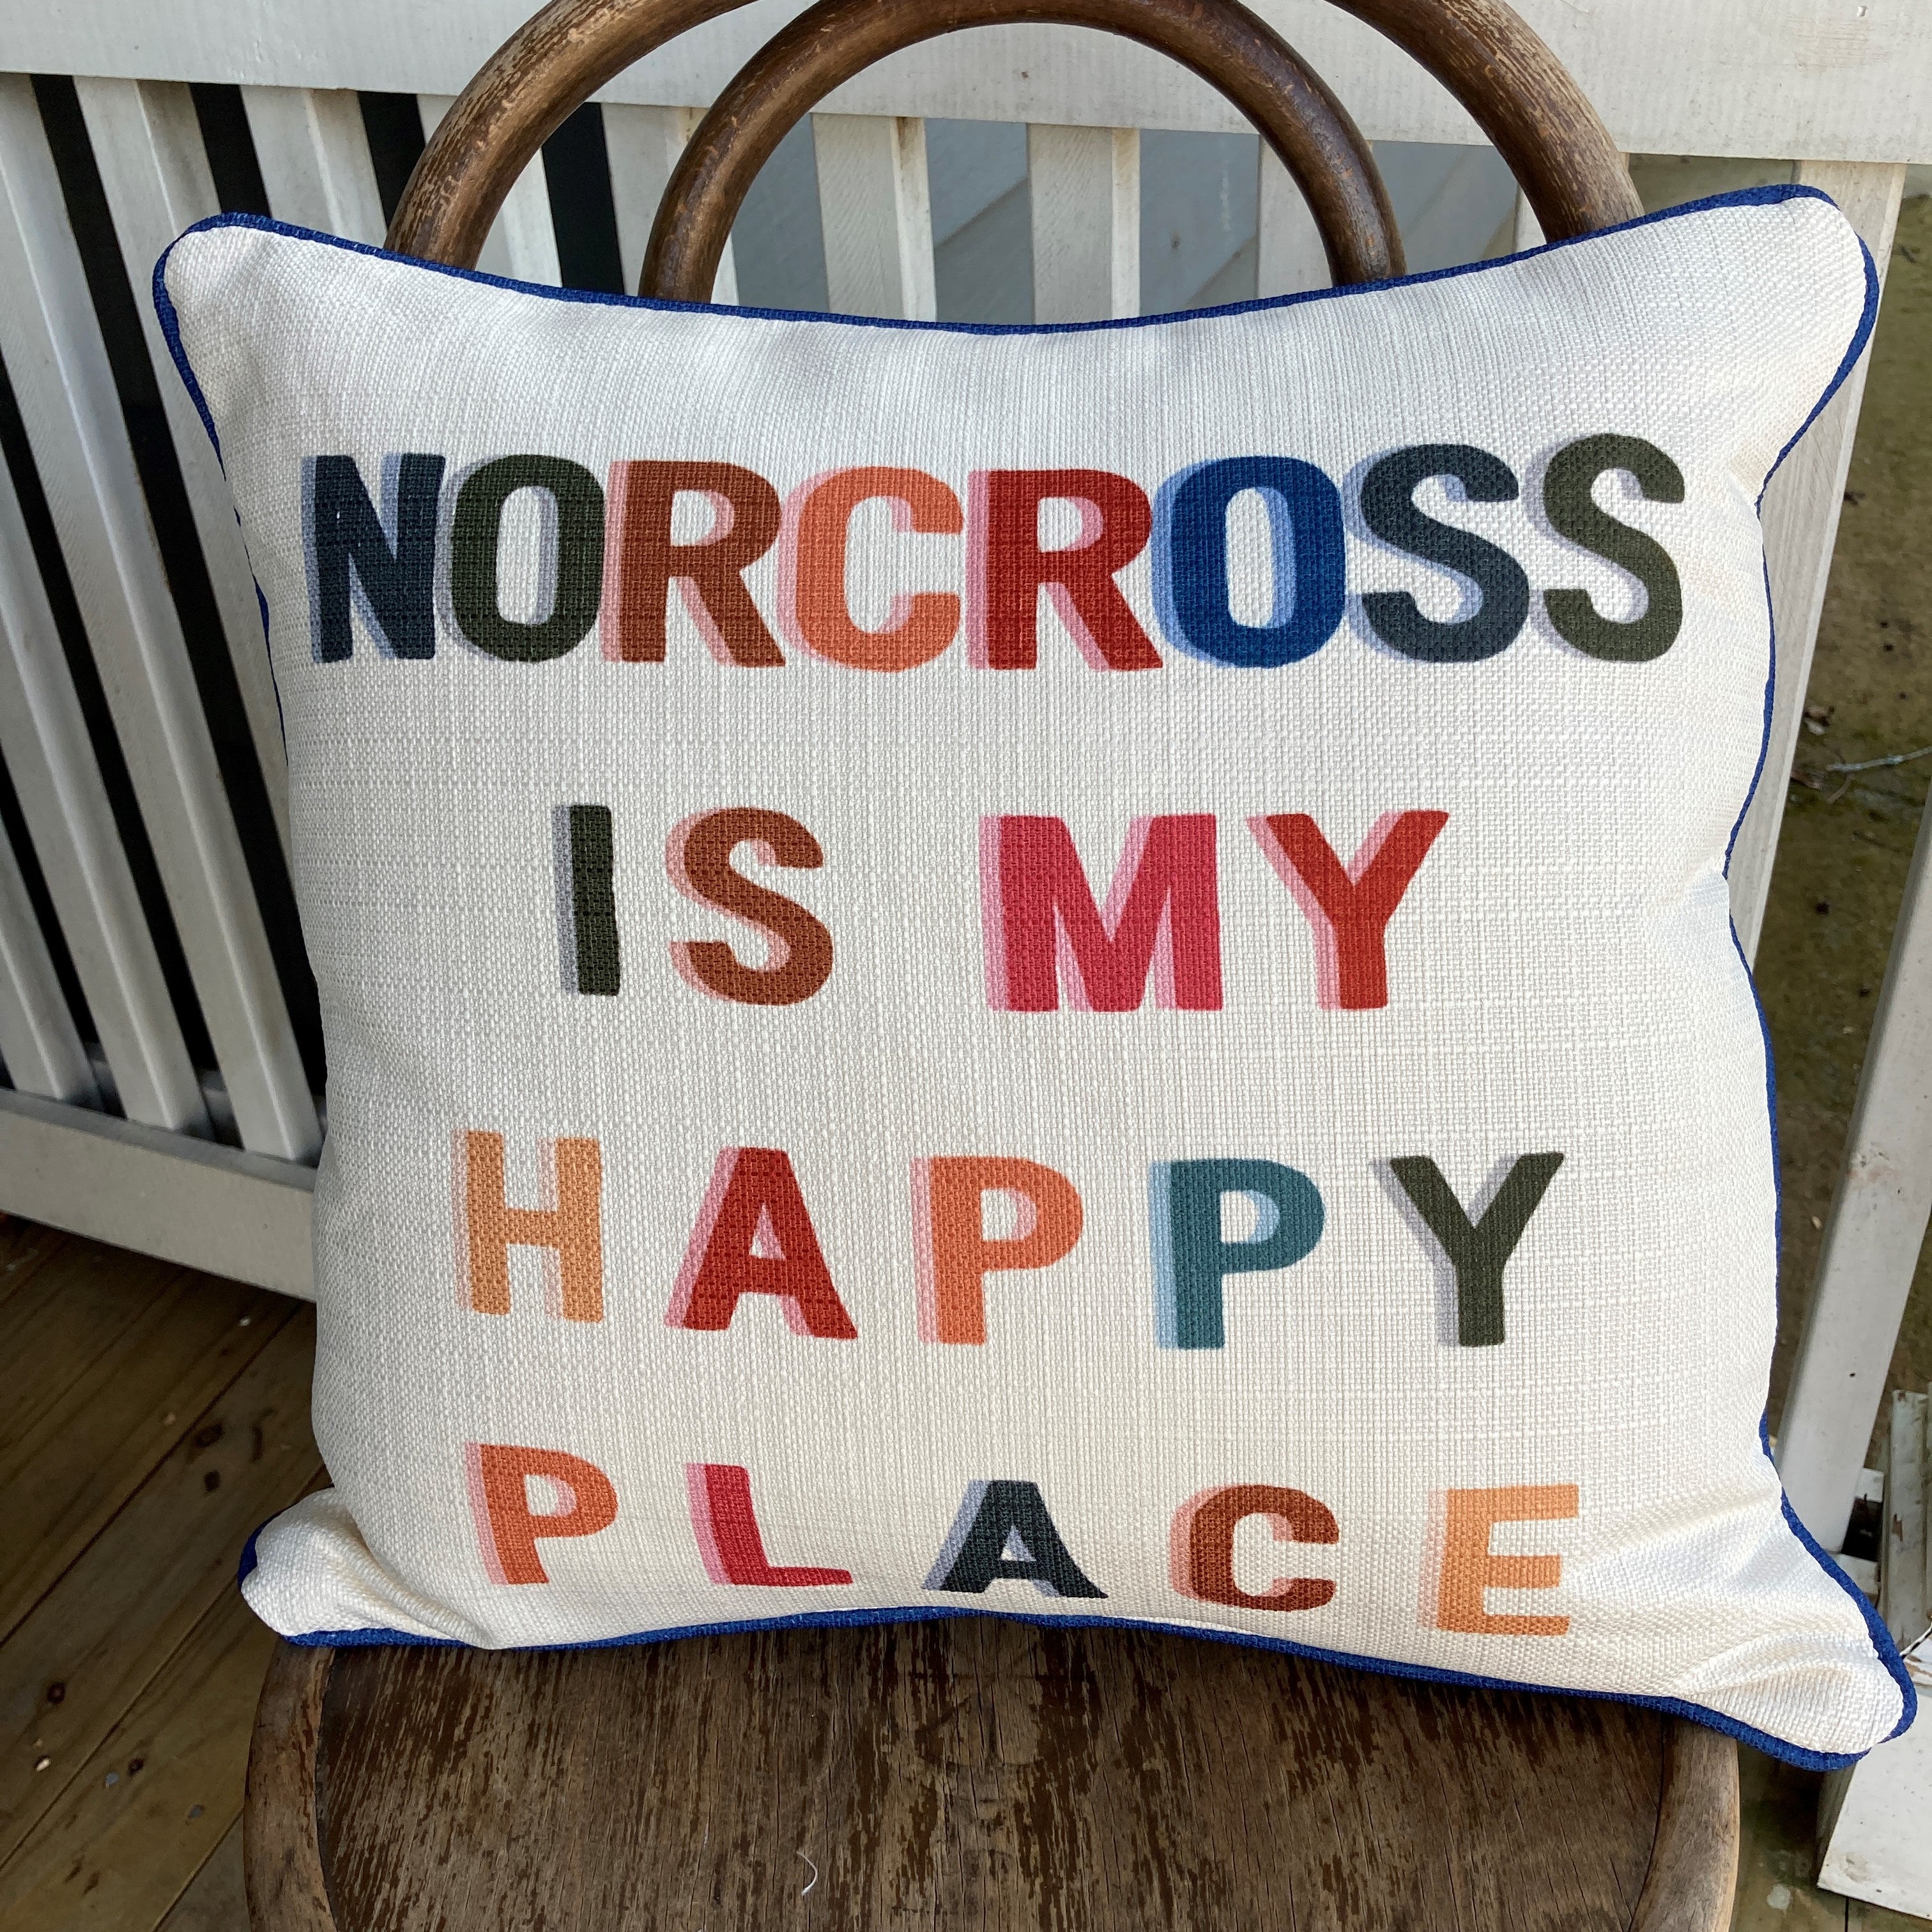 Historic Norcross - Square Pillows